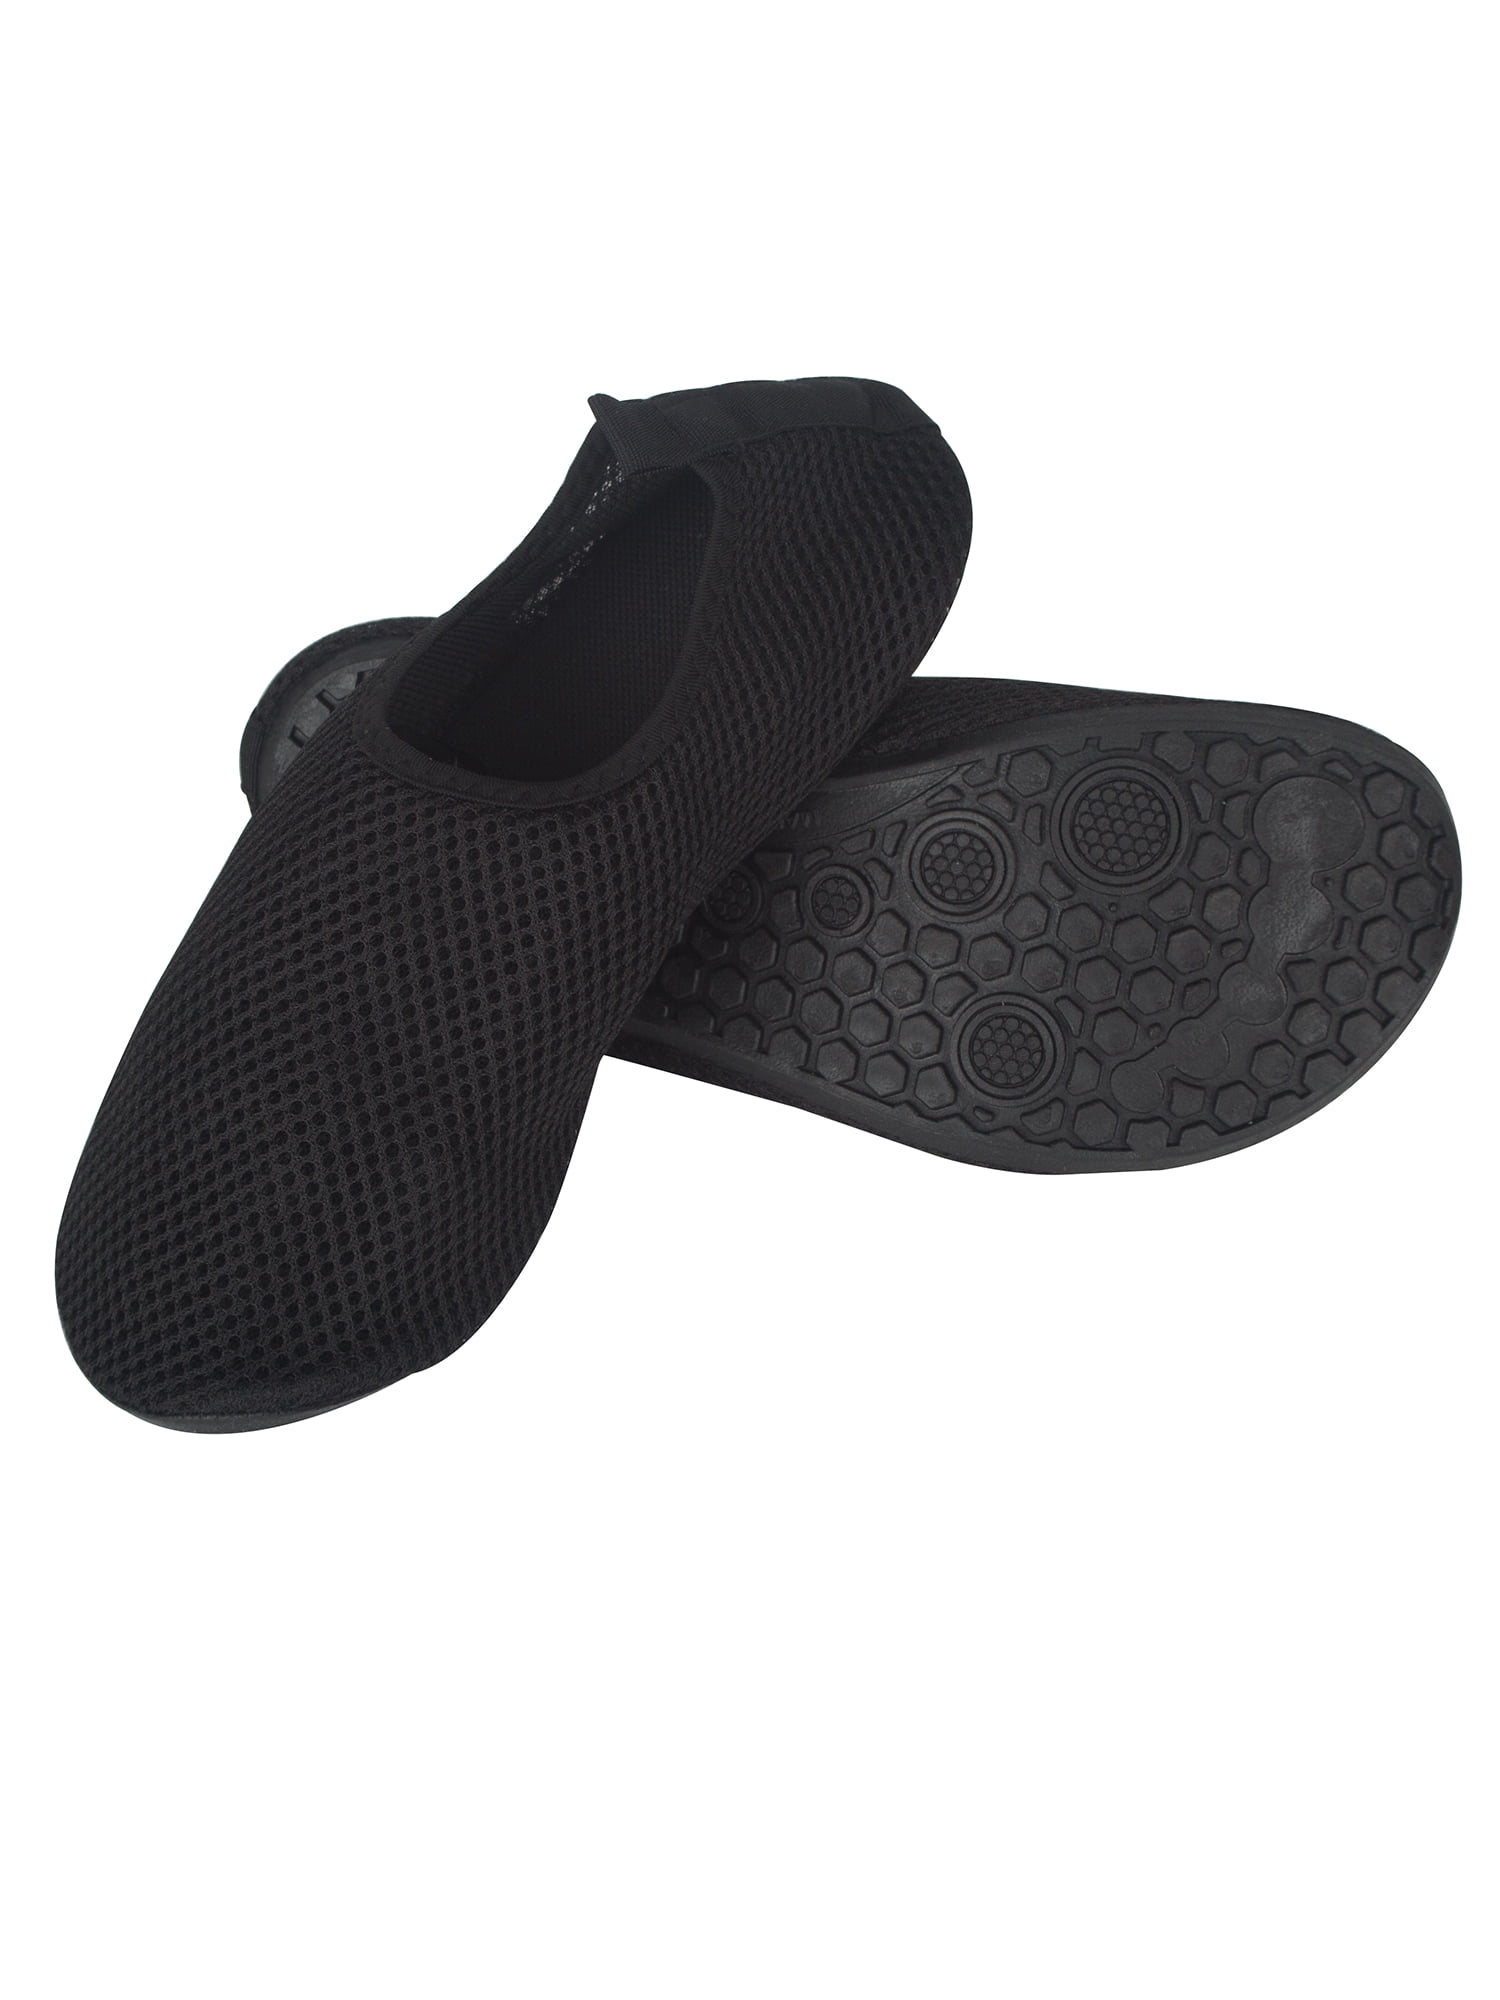 Unisex Water Shoes Socks Aqua Swim Soft Sole Fitness Treadmills Sport US Size 12 